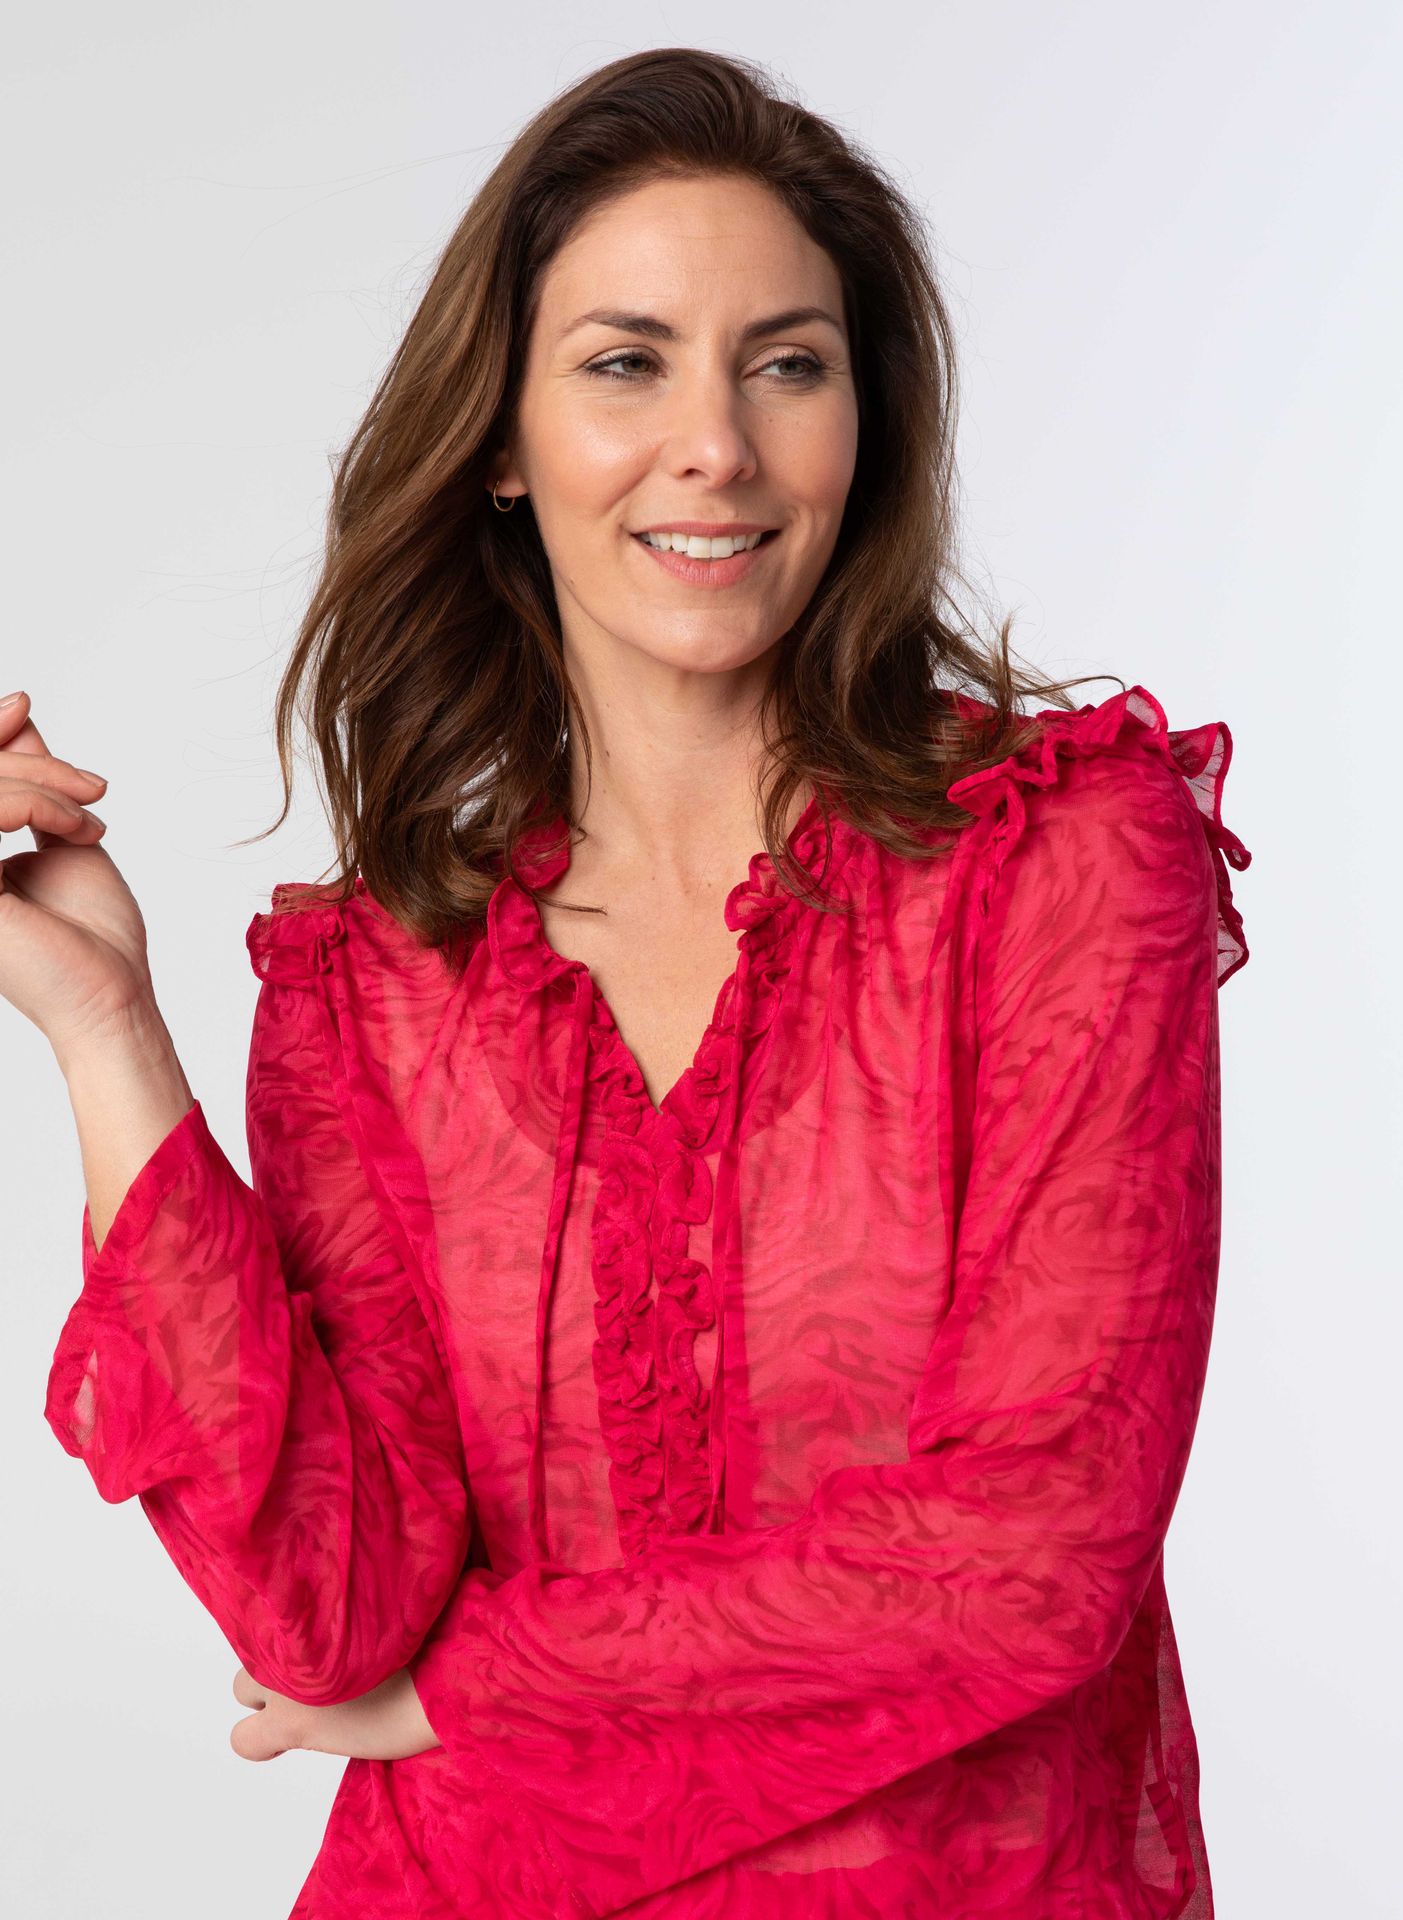 Norah Roze blouse met ruches fuchsia 213191-953